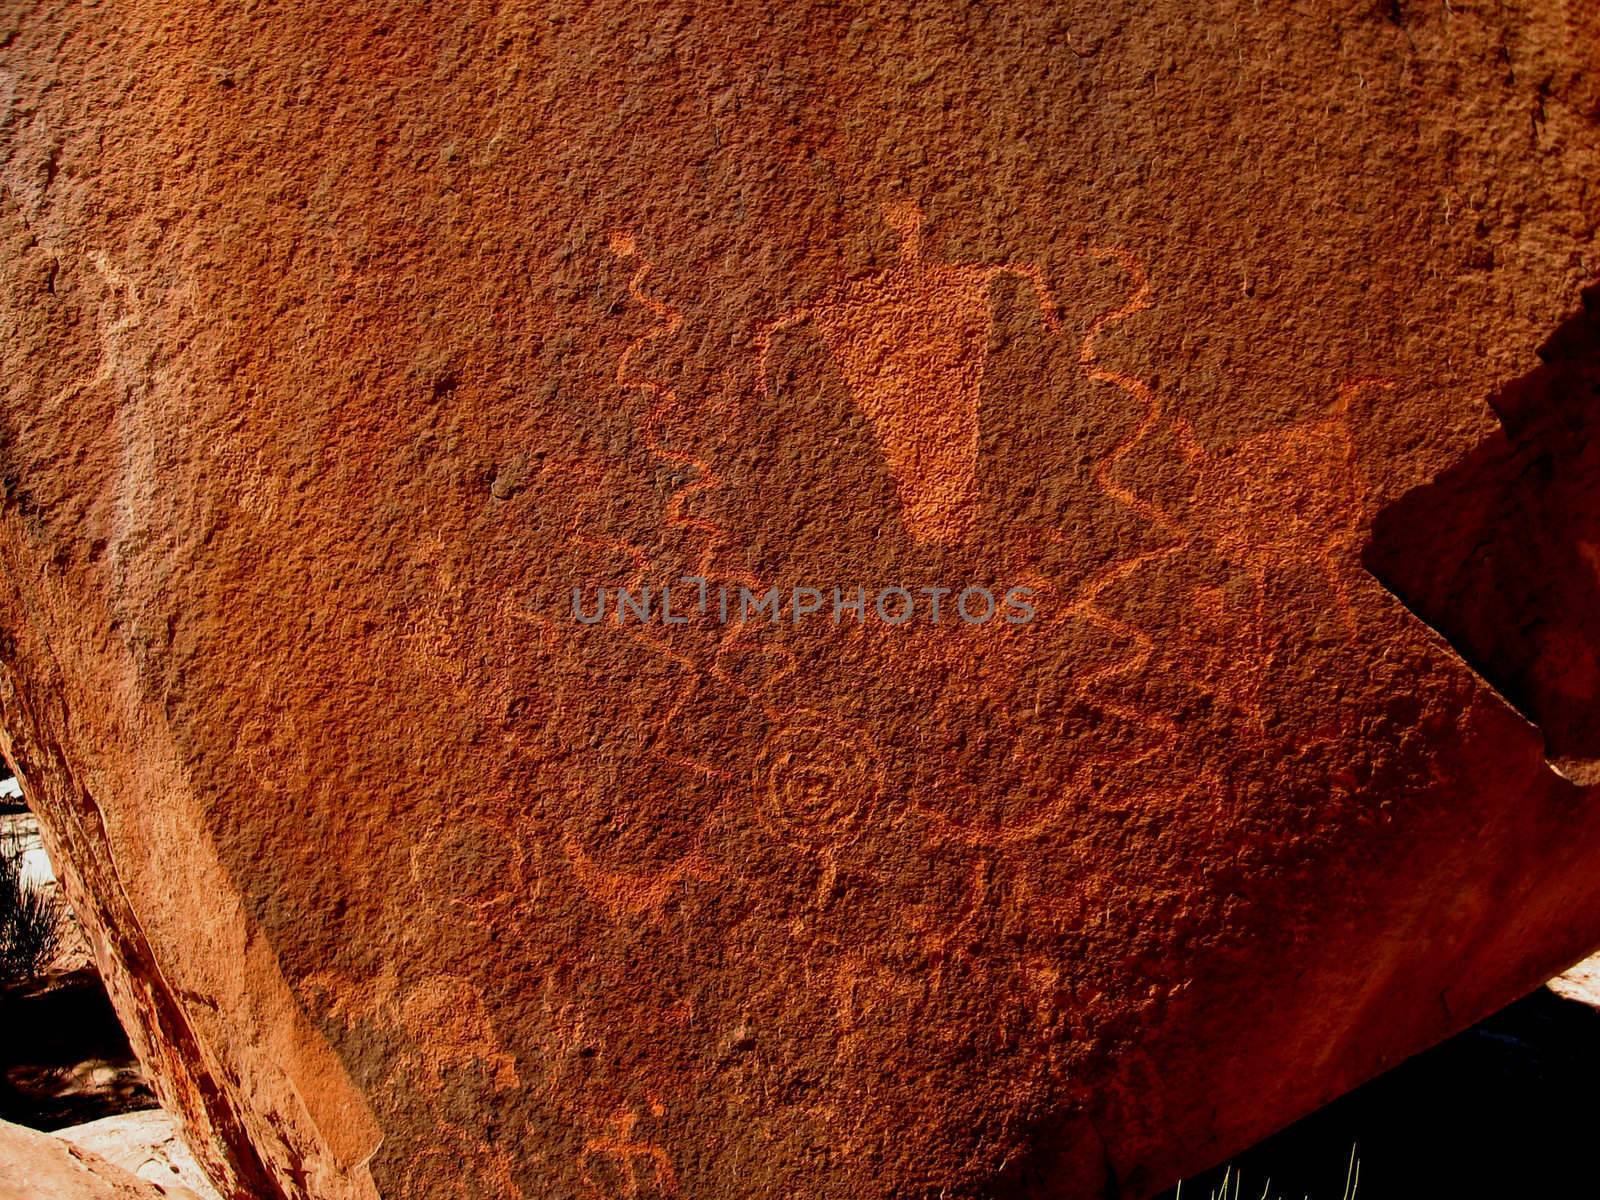 Historic Anasazi petroglyphs on huge sandstone boulder in Step Canyon, Utah, USA.